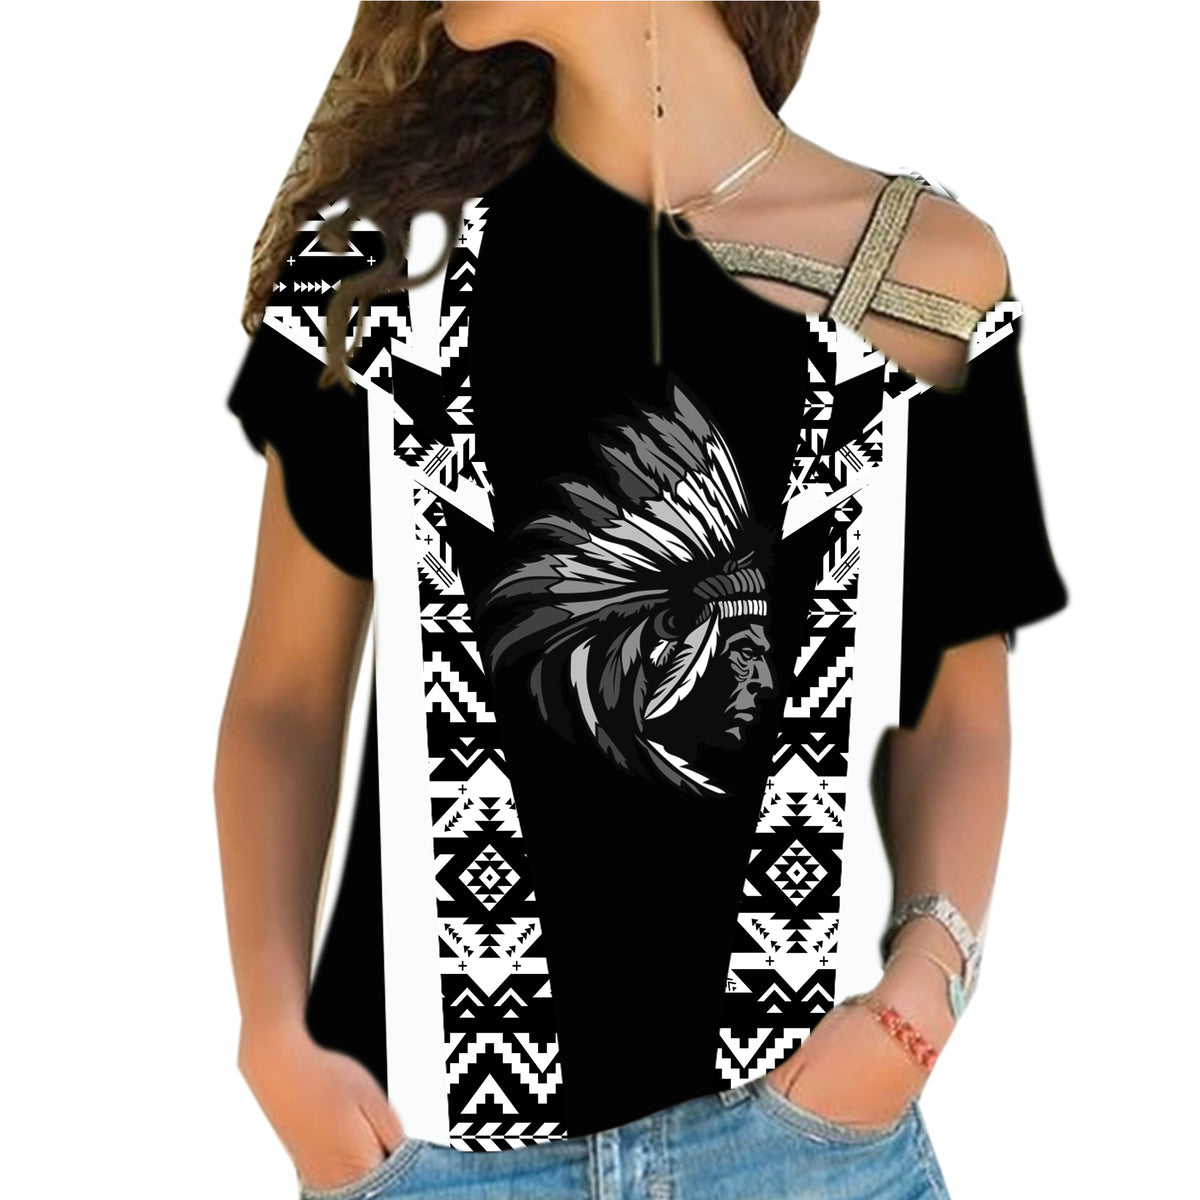 Powwow StoreCRS0001208 Native American Cross Shoulder Shirt